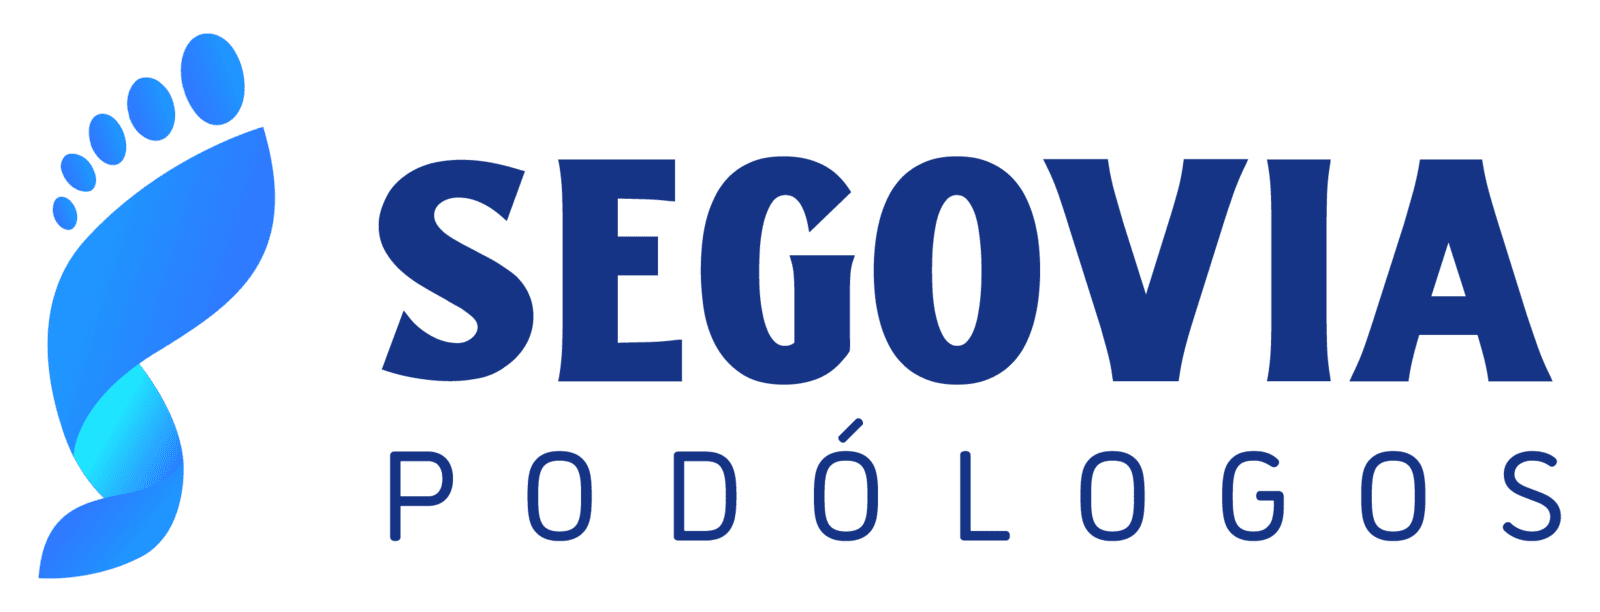 Podólogos Segovia